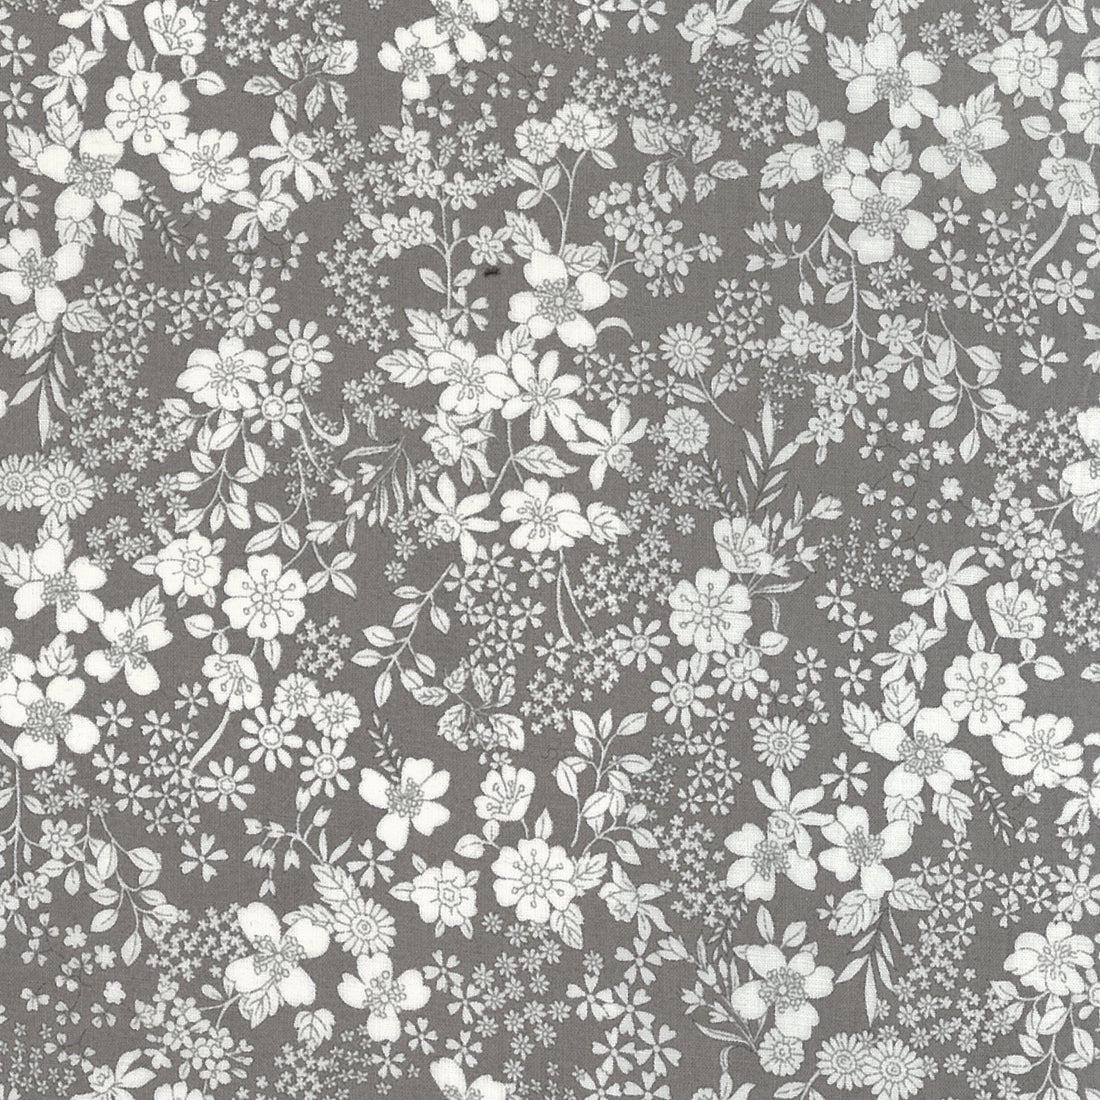 Kokka-Wildflowers Grey on Lawn-fabric-gather here online